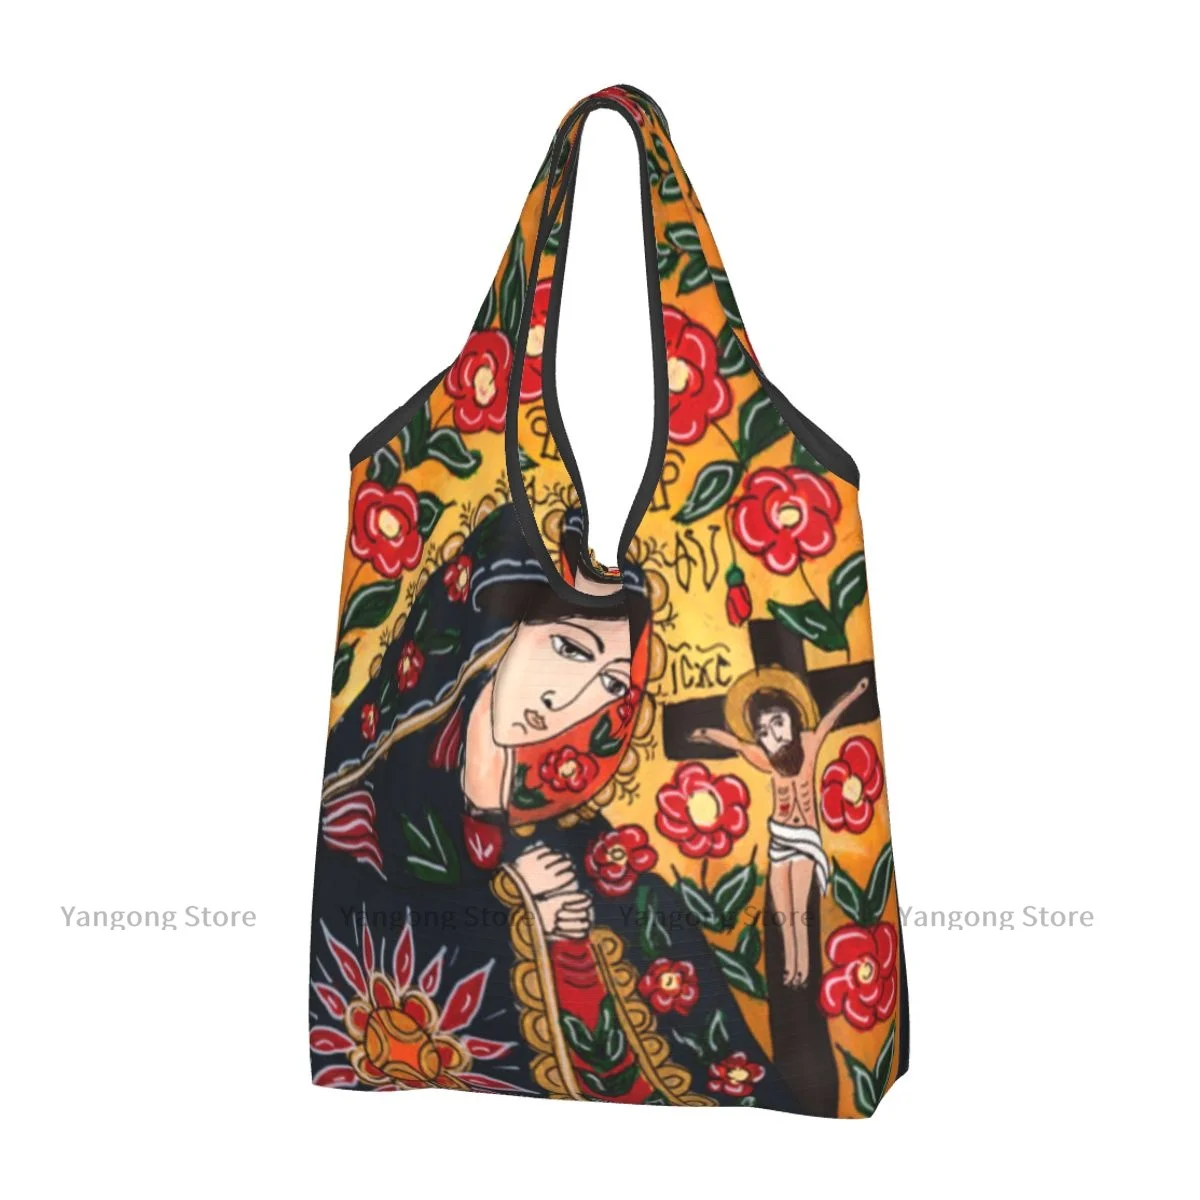 

Shopping Bag Virgin Mary And Jesus Eco-friendly Folding Reusable Portable Shoulder Handbag for Travel Grocery Bag